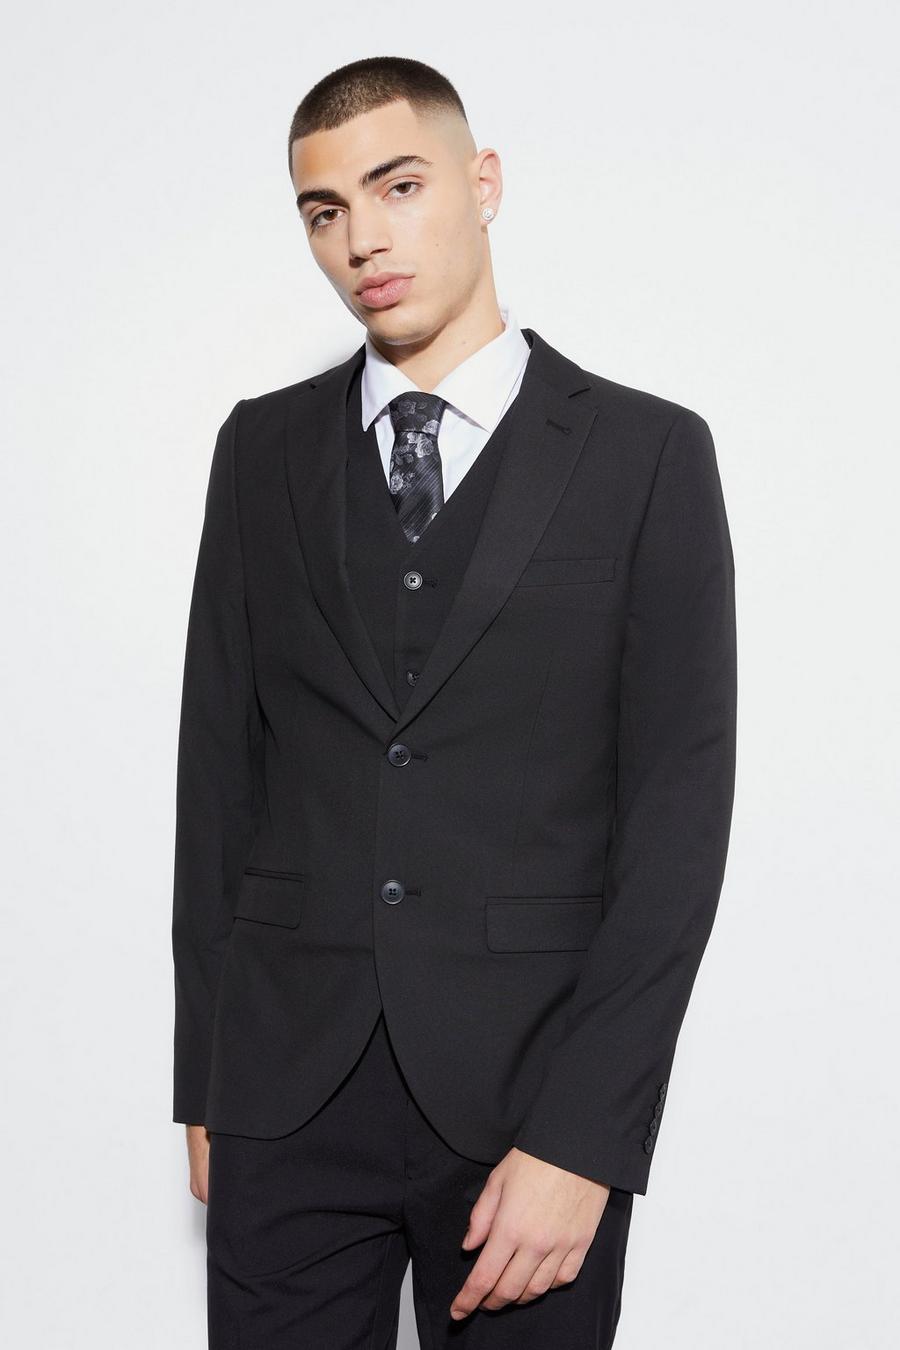 Black negro ז'קט חליפה בגזרת סופר סקיני עם רכיסה בודדת